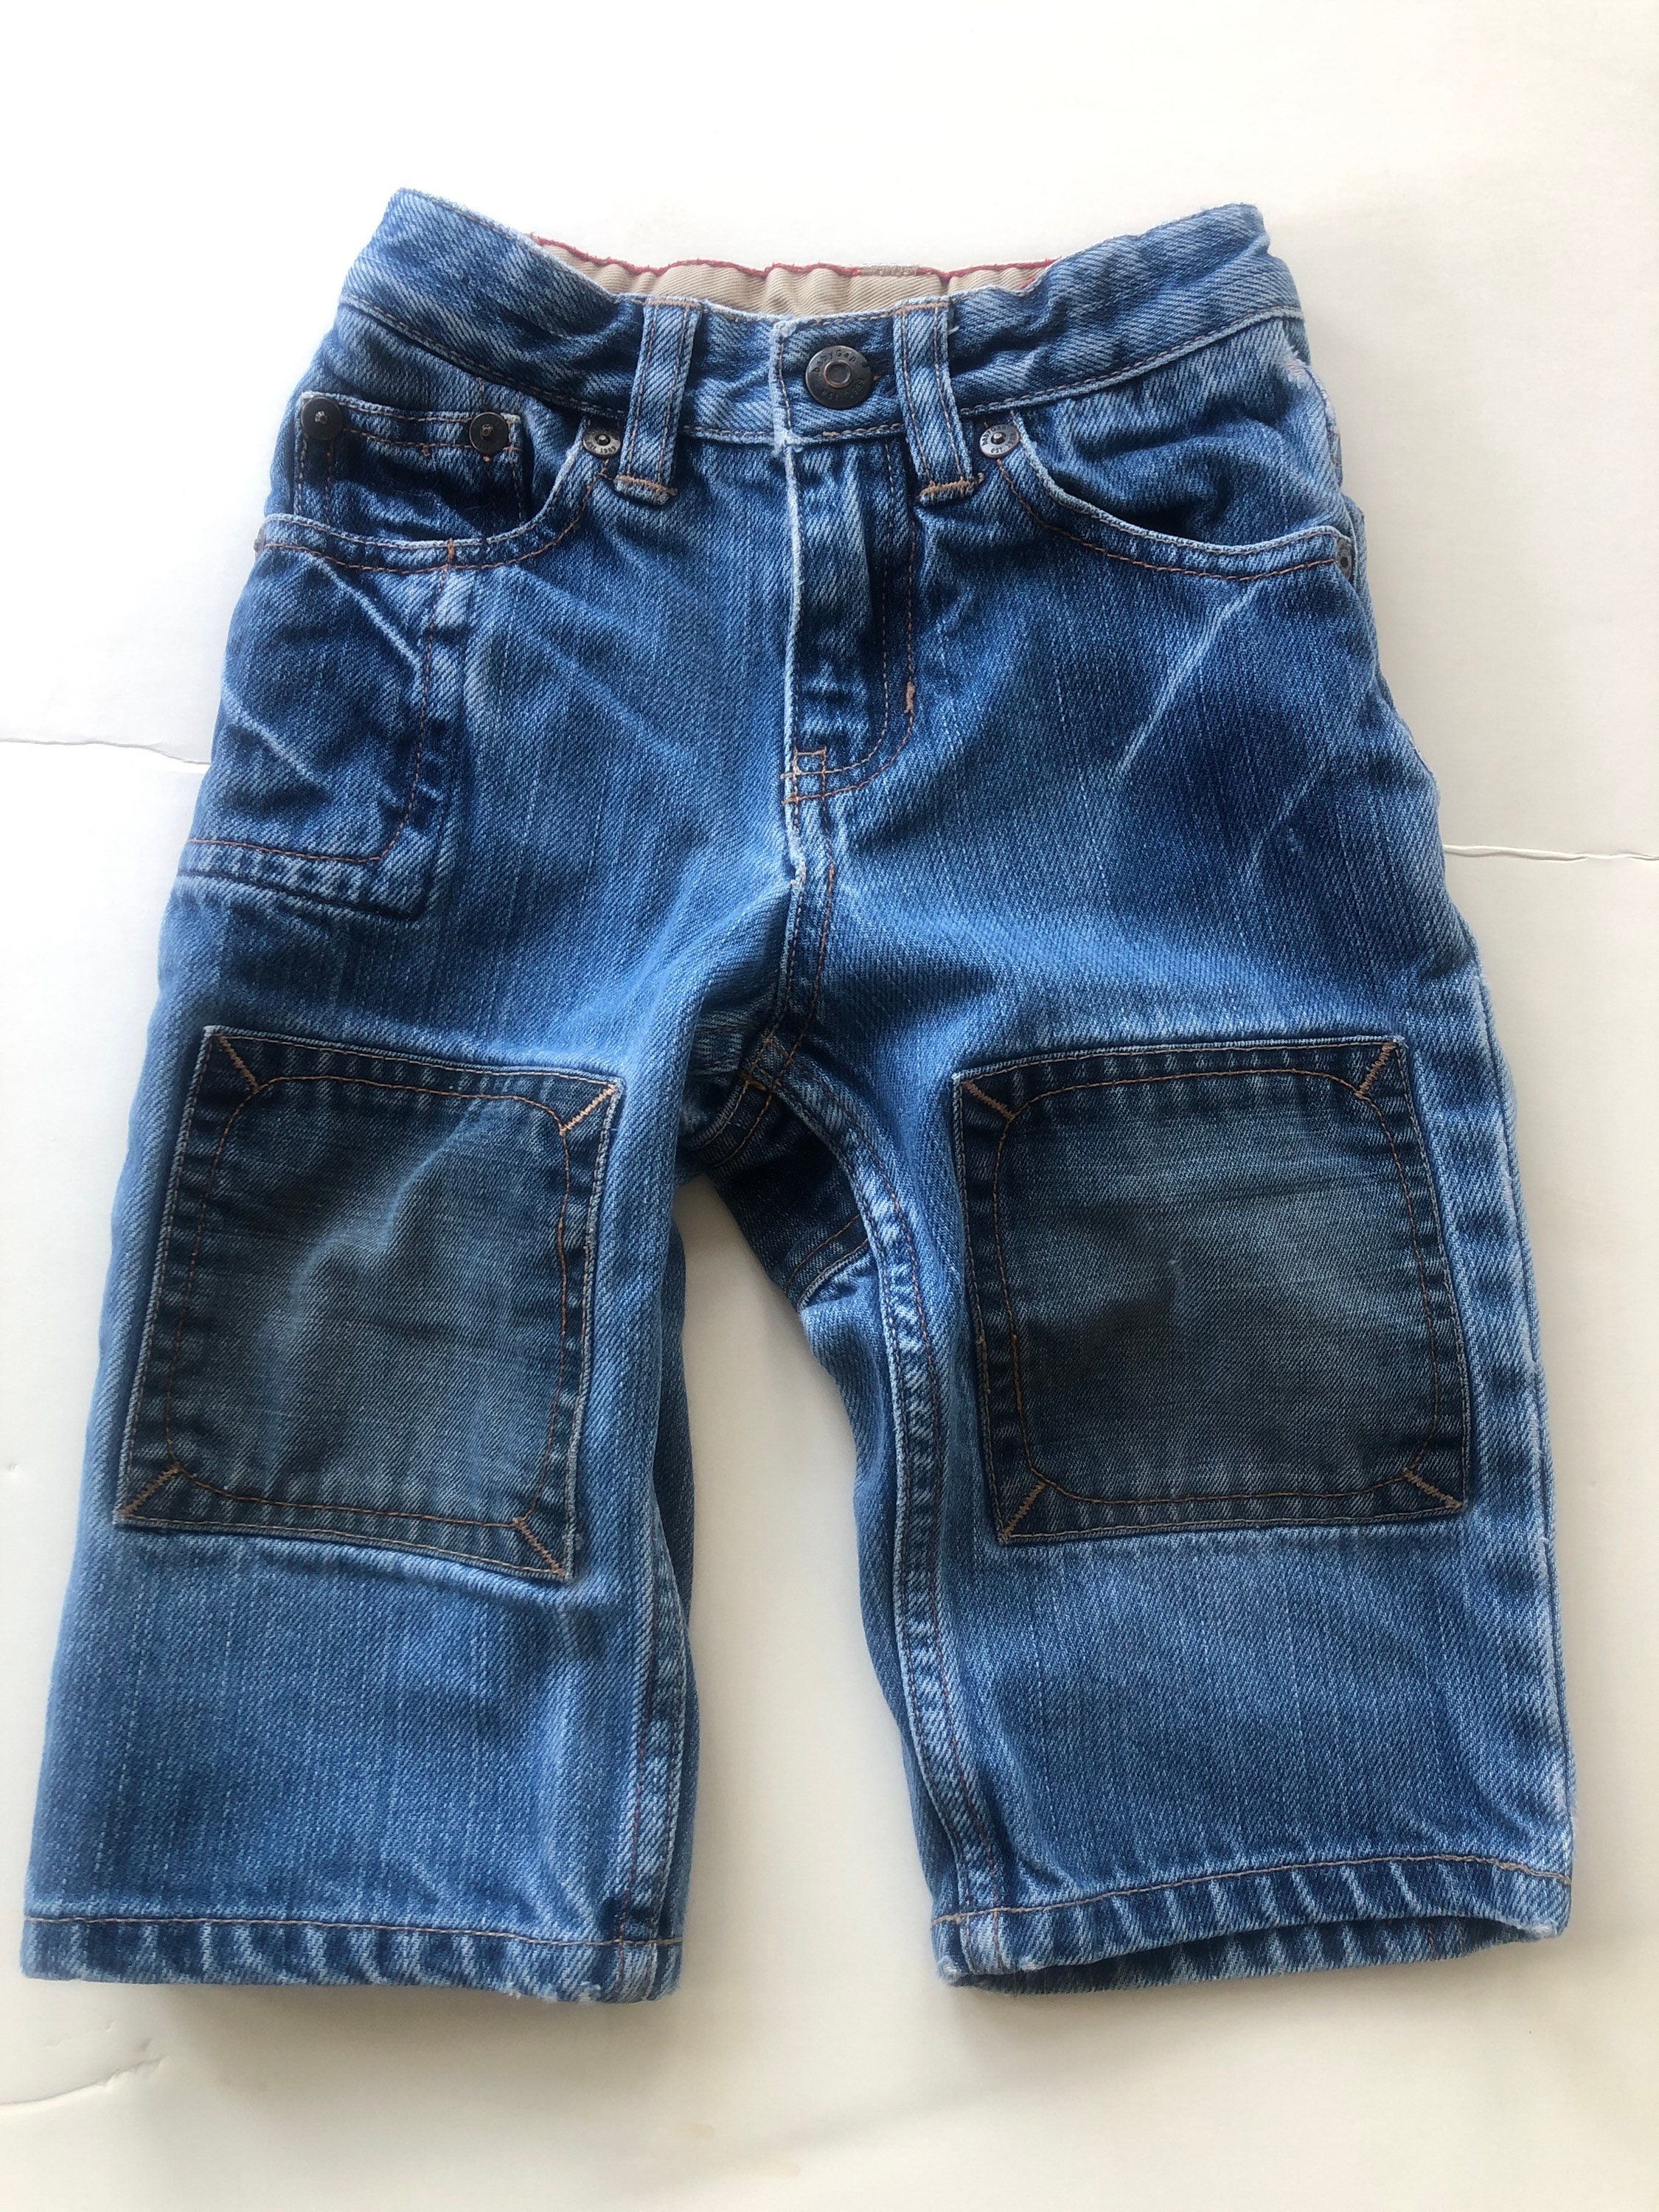 Vintage jeans 90s baby clothes adjustable waist denim | Etsy